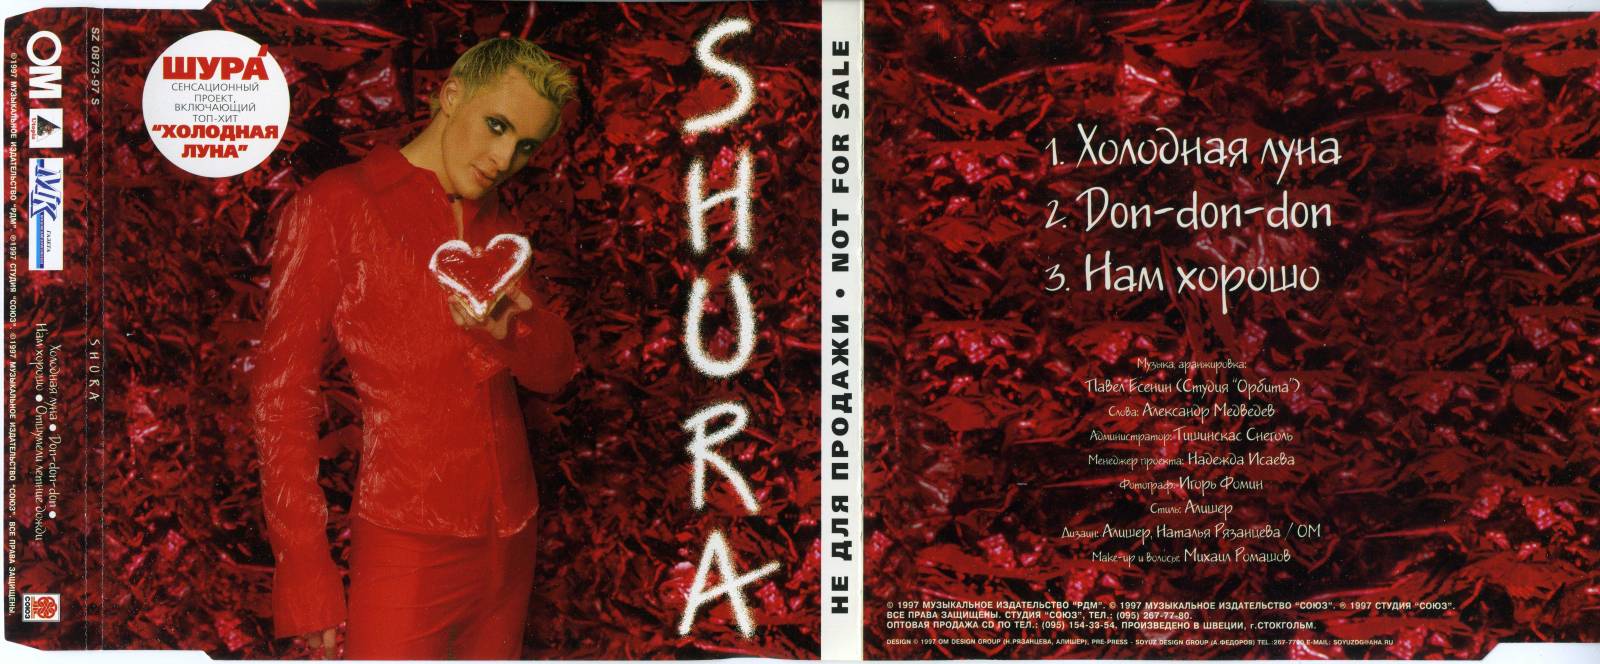 Шура холодная луна слушать. Шура - Shura (альбом 1997). Шура 1997 обложки. Шура Shura 2 1998. Shura 1997 CD.